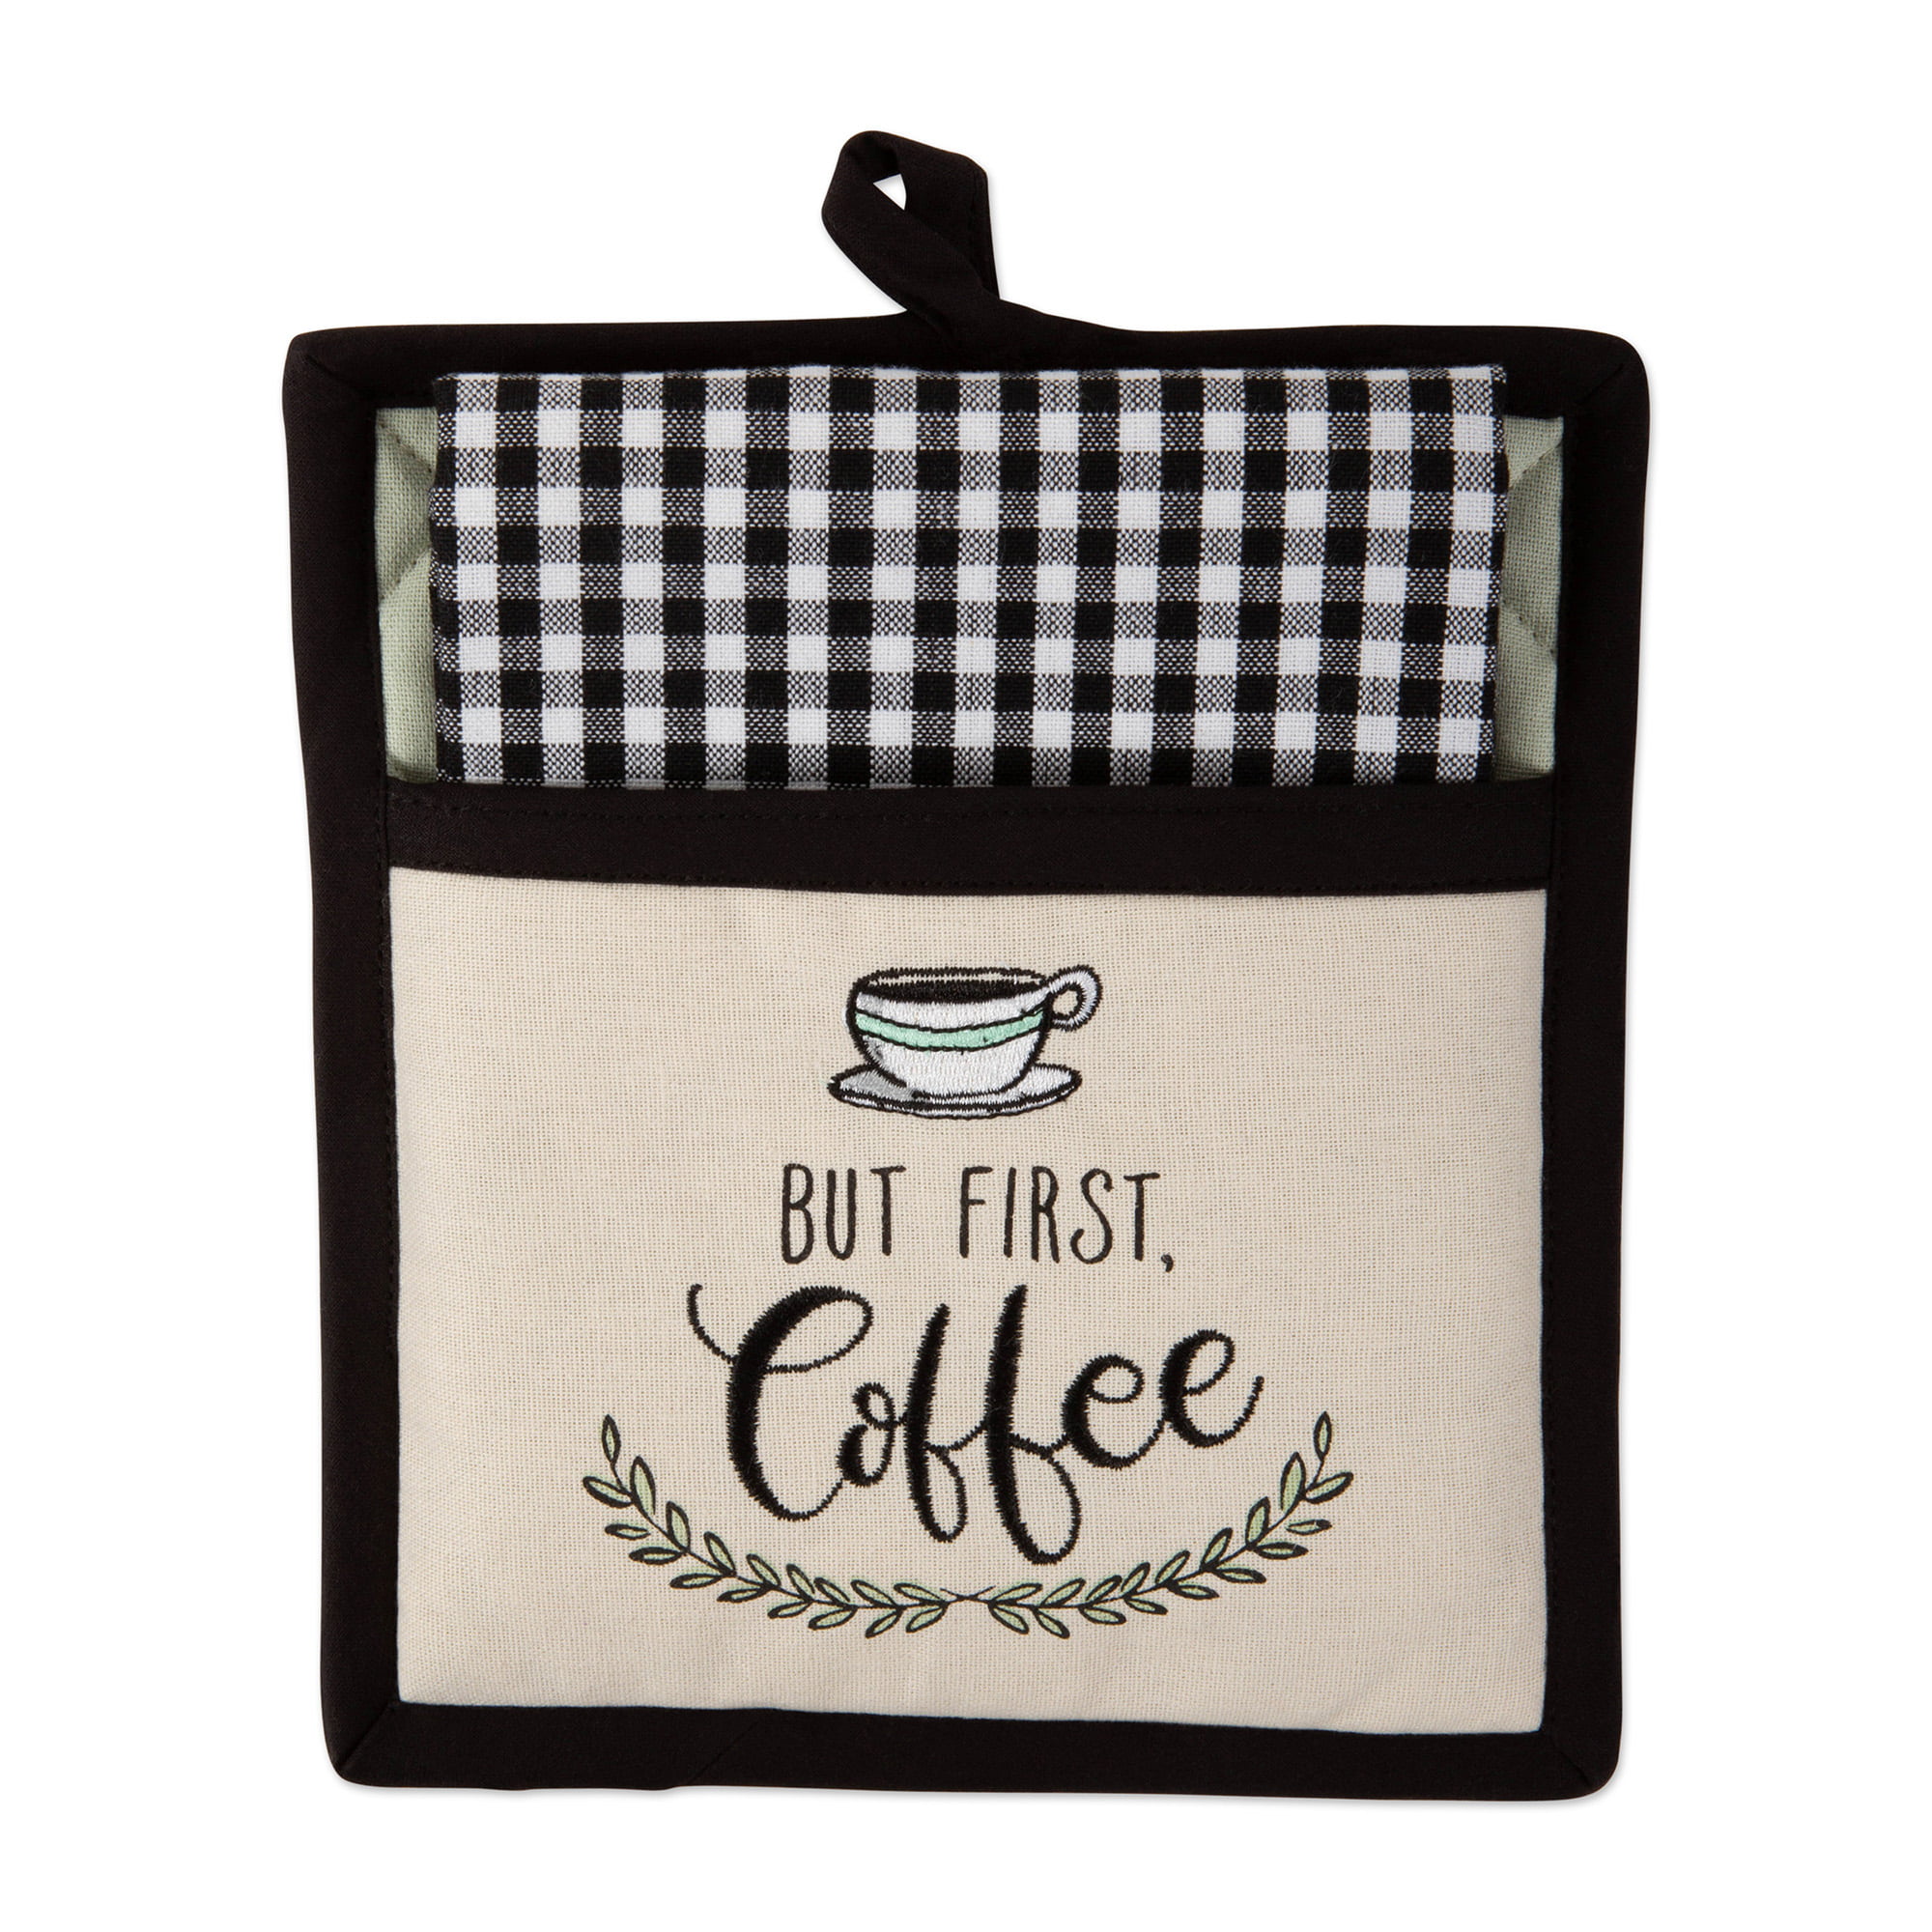 5 Piece Coffee Latte Espresso Theme Oven Mitt Pot Holder Towels Set Home Decor 